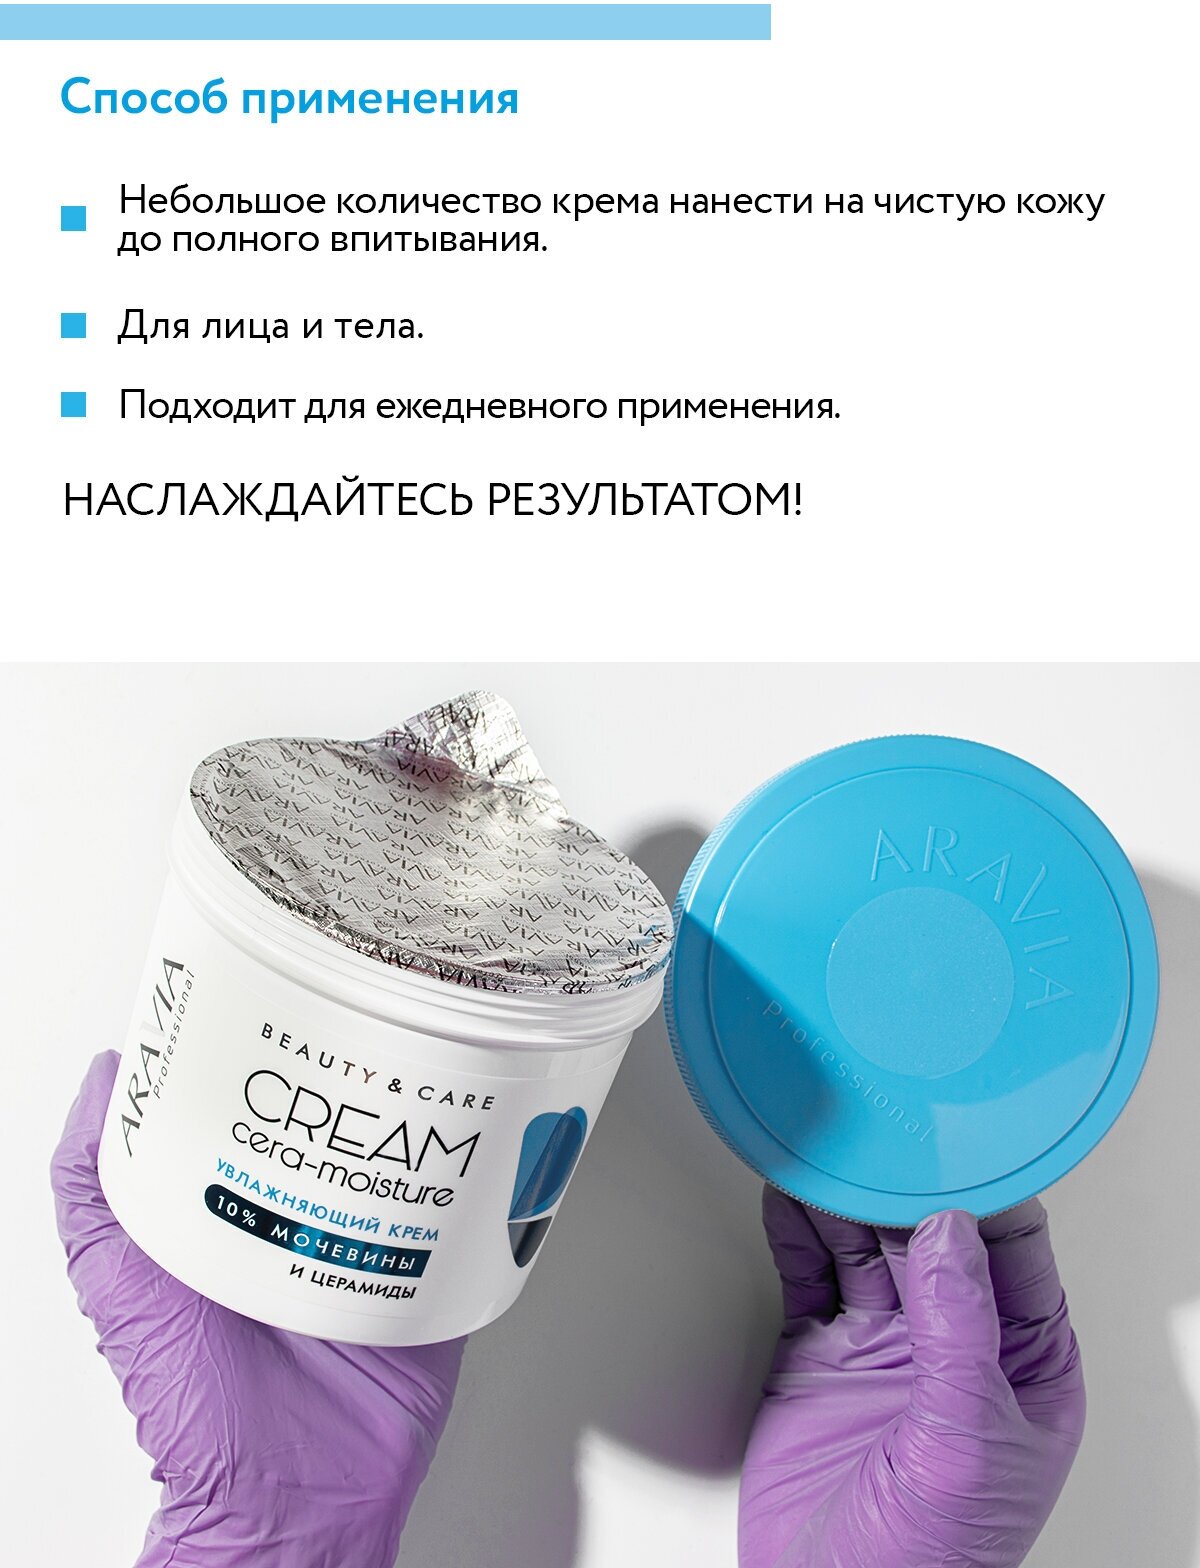 ARAVIA Увлажняющий крем с церамидами и мочевиной (10%) Cera-moisture Cream, 550 мл